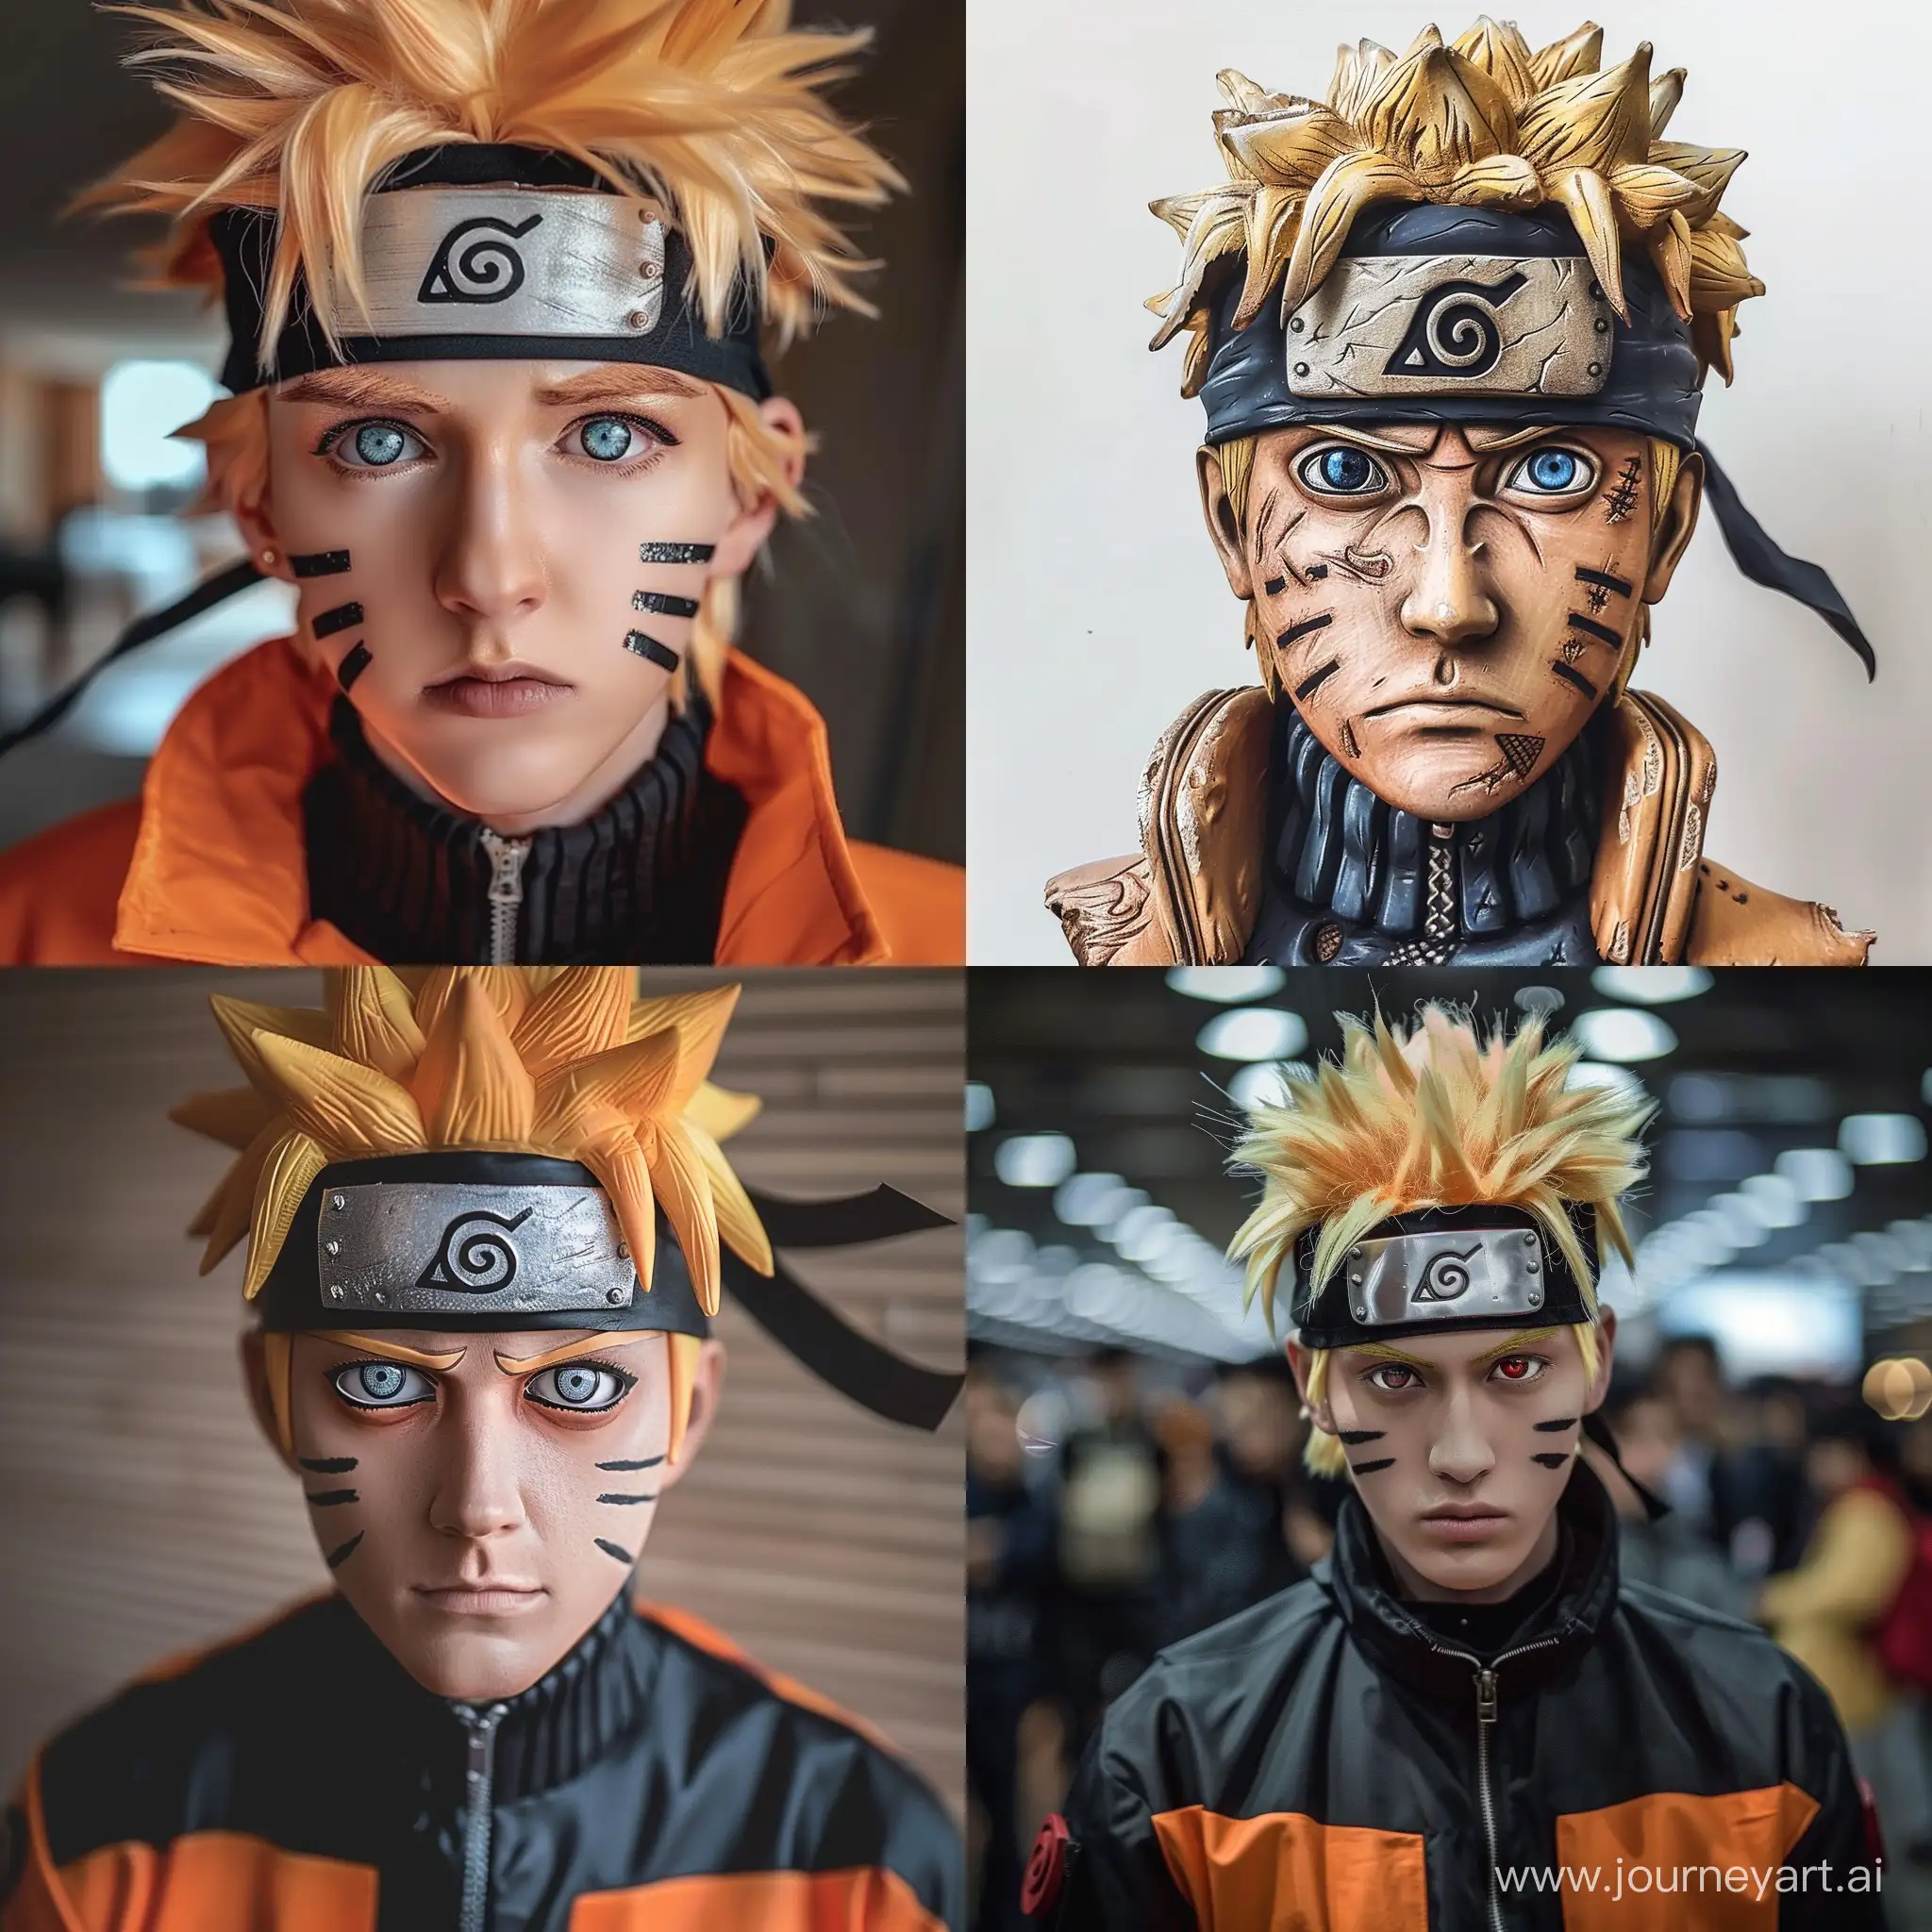 Realistic-Portrait-of-Naruto-Uzumaki-the-Iconic-Ninja-High-Quality-Artwork